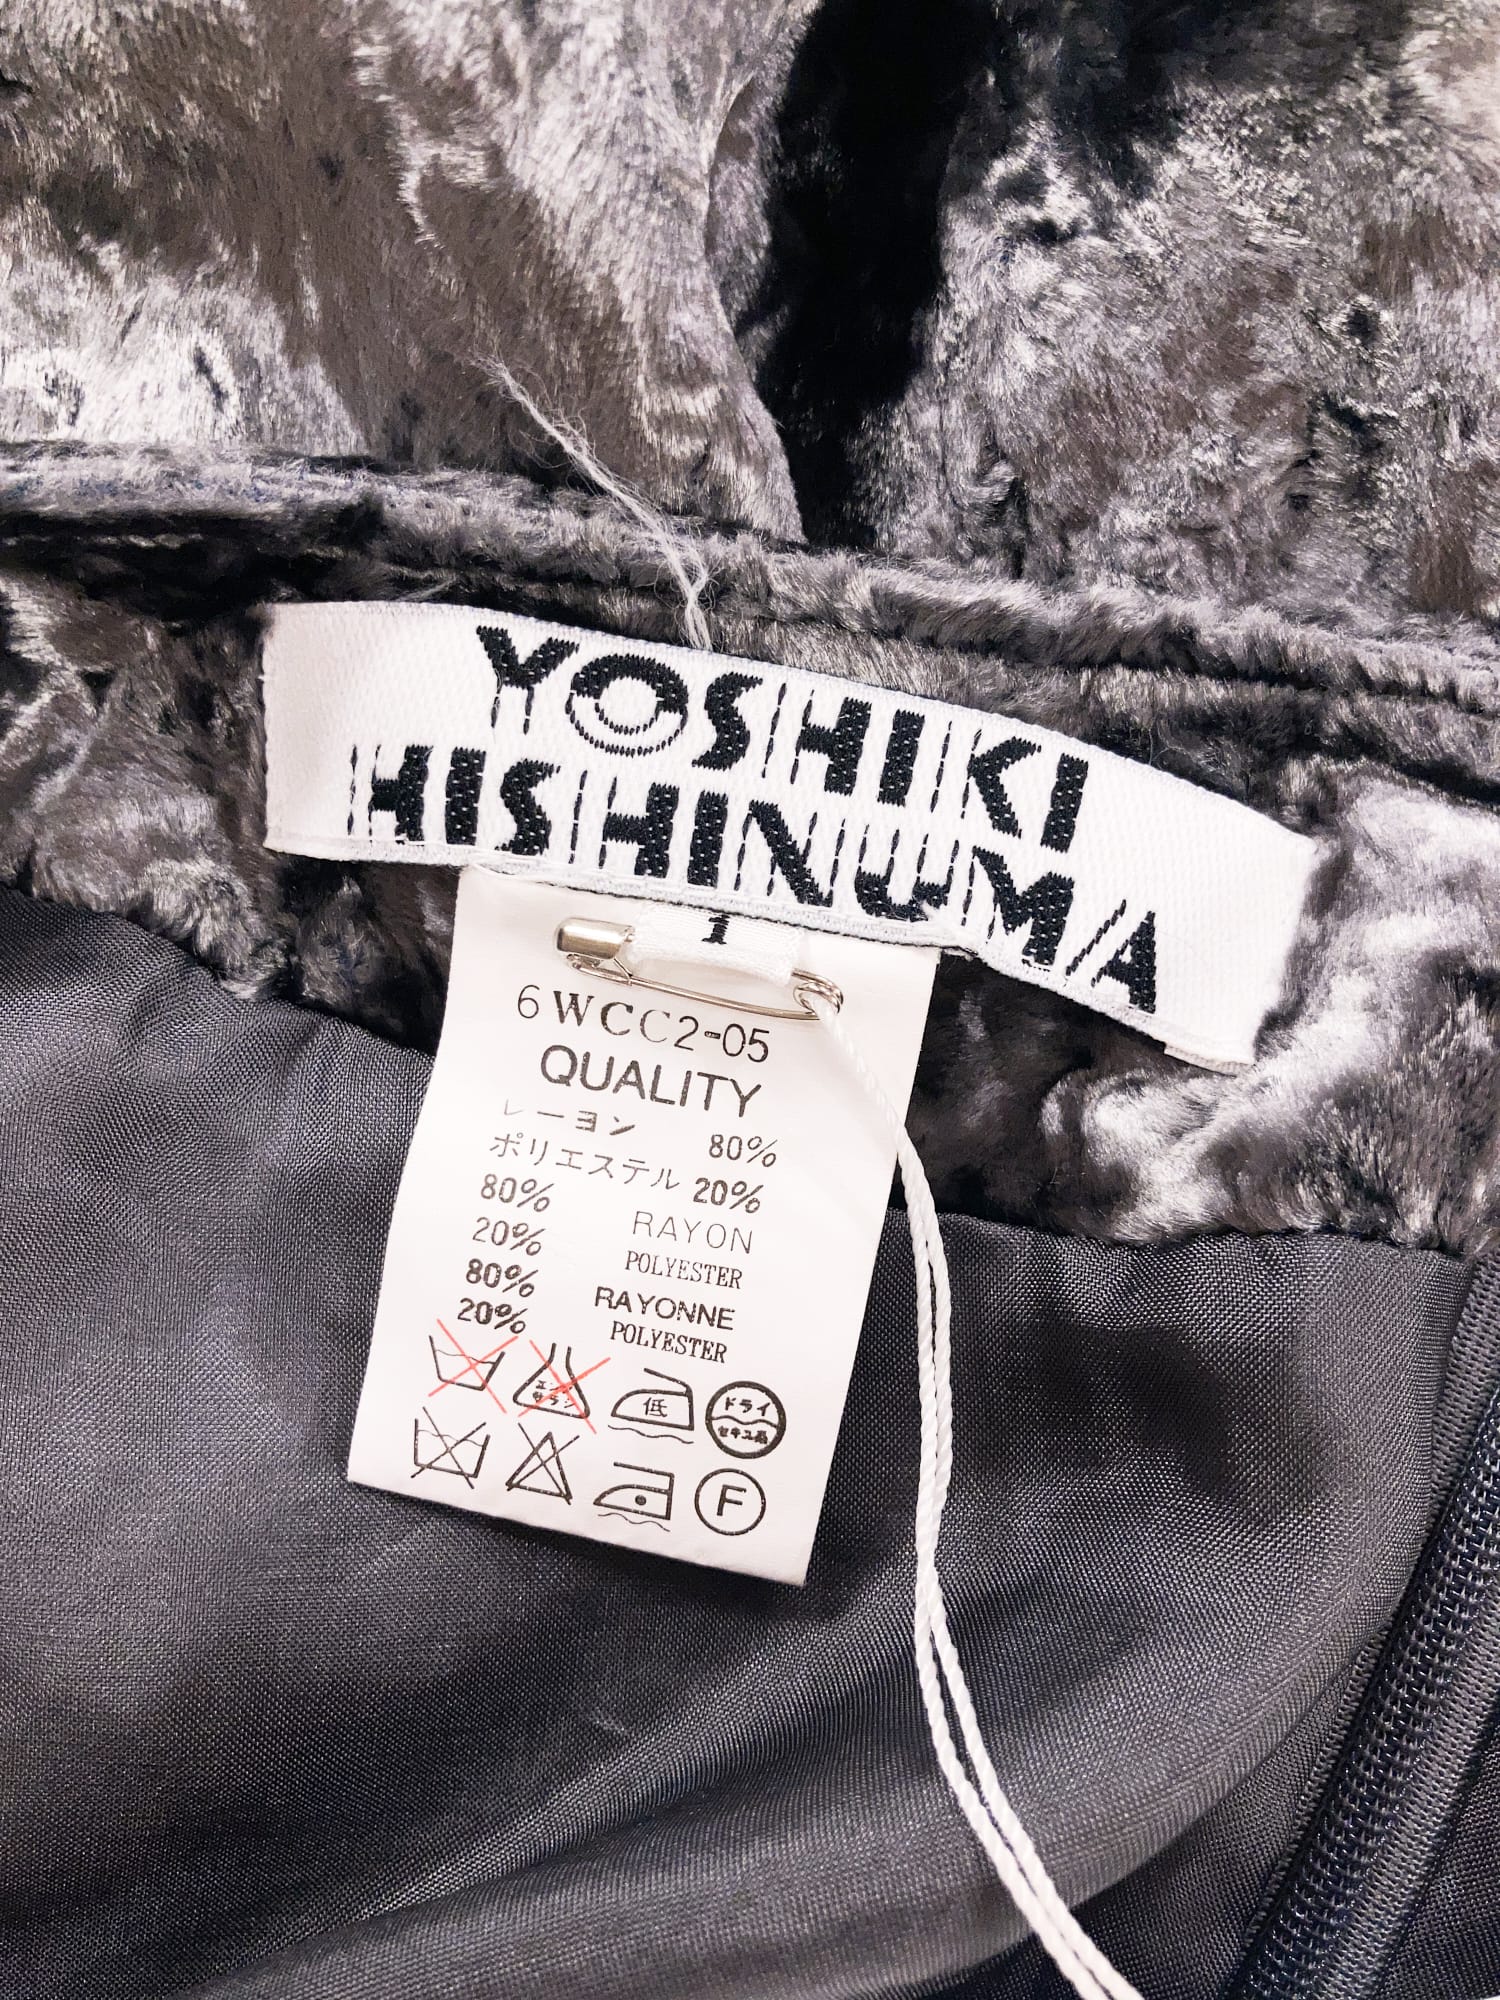 Yoshiki Hishinuma 1990s shiny silver velvet knee length skirt - size 1 S